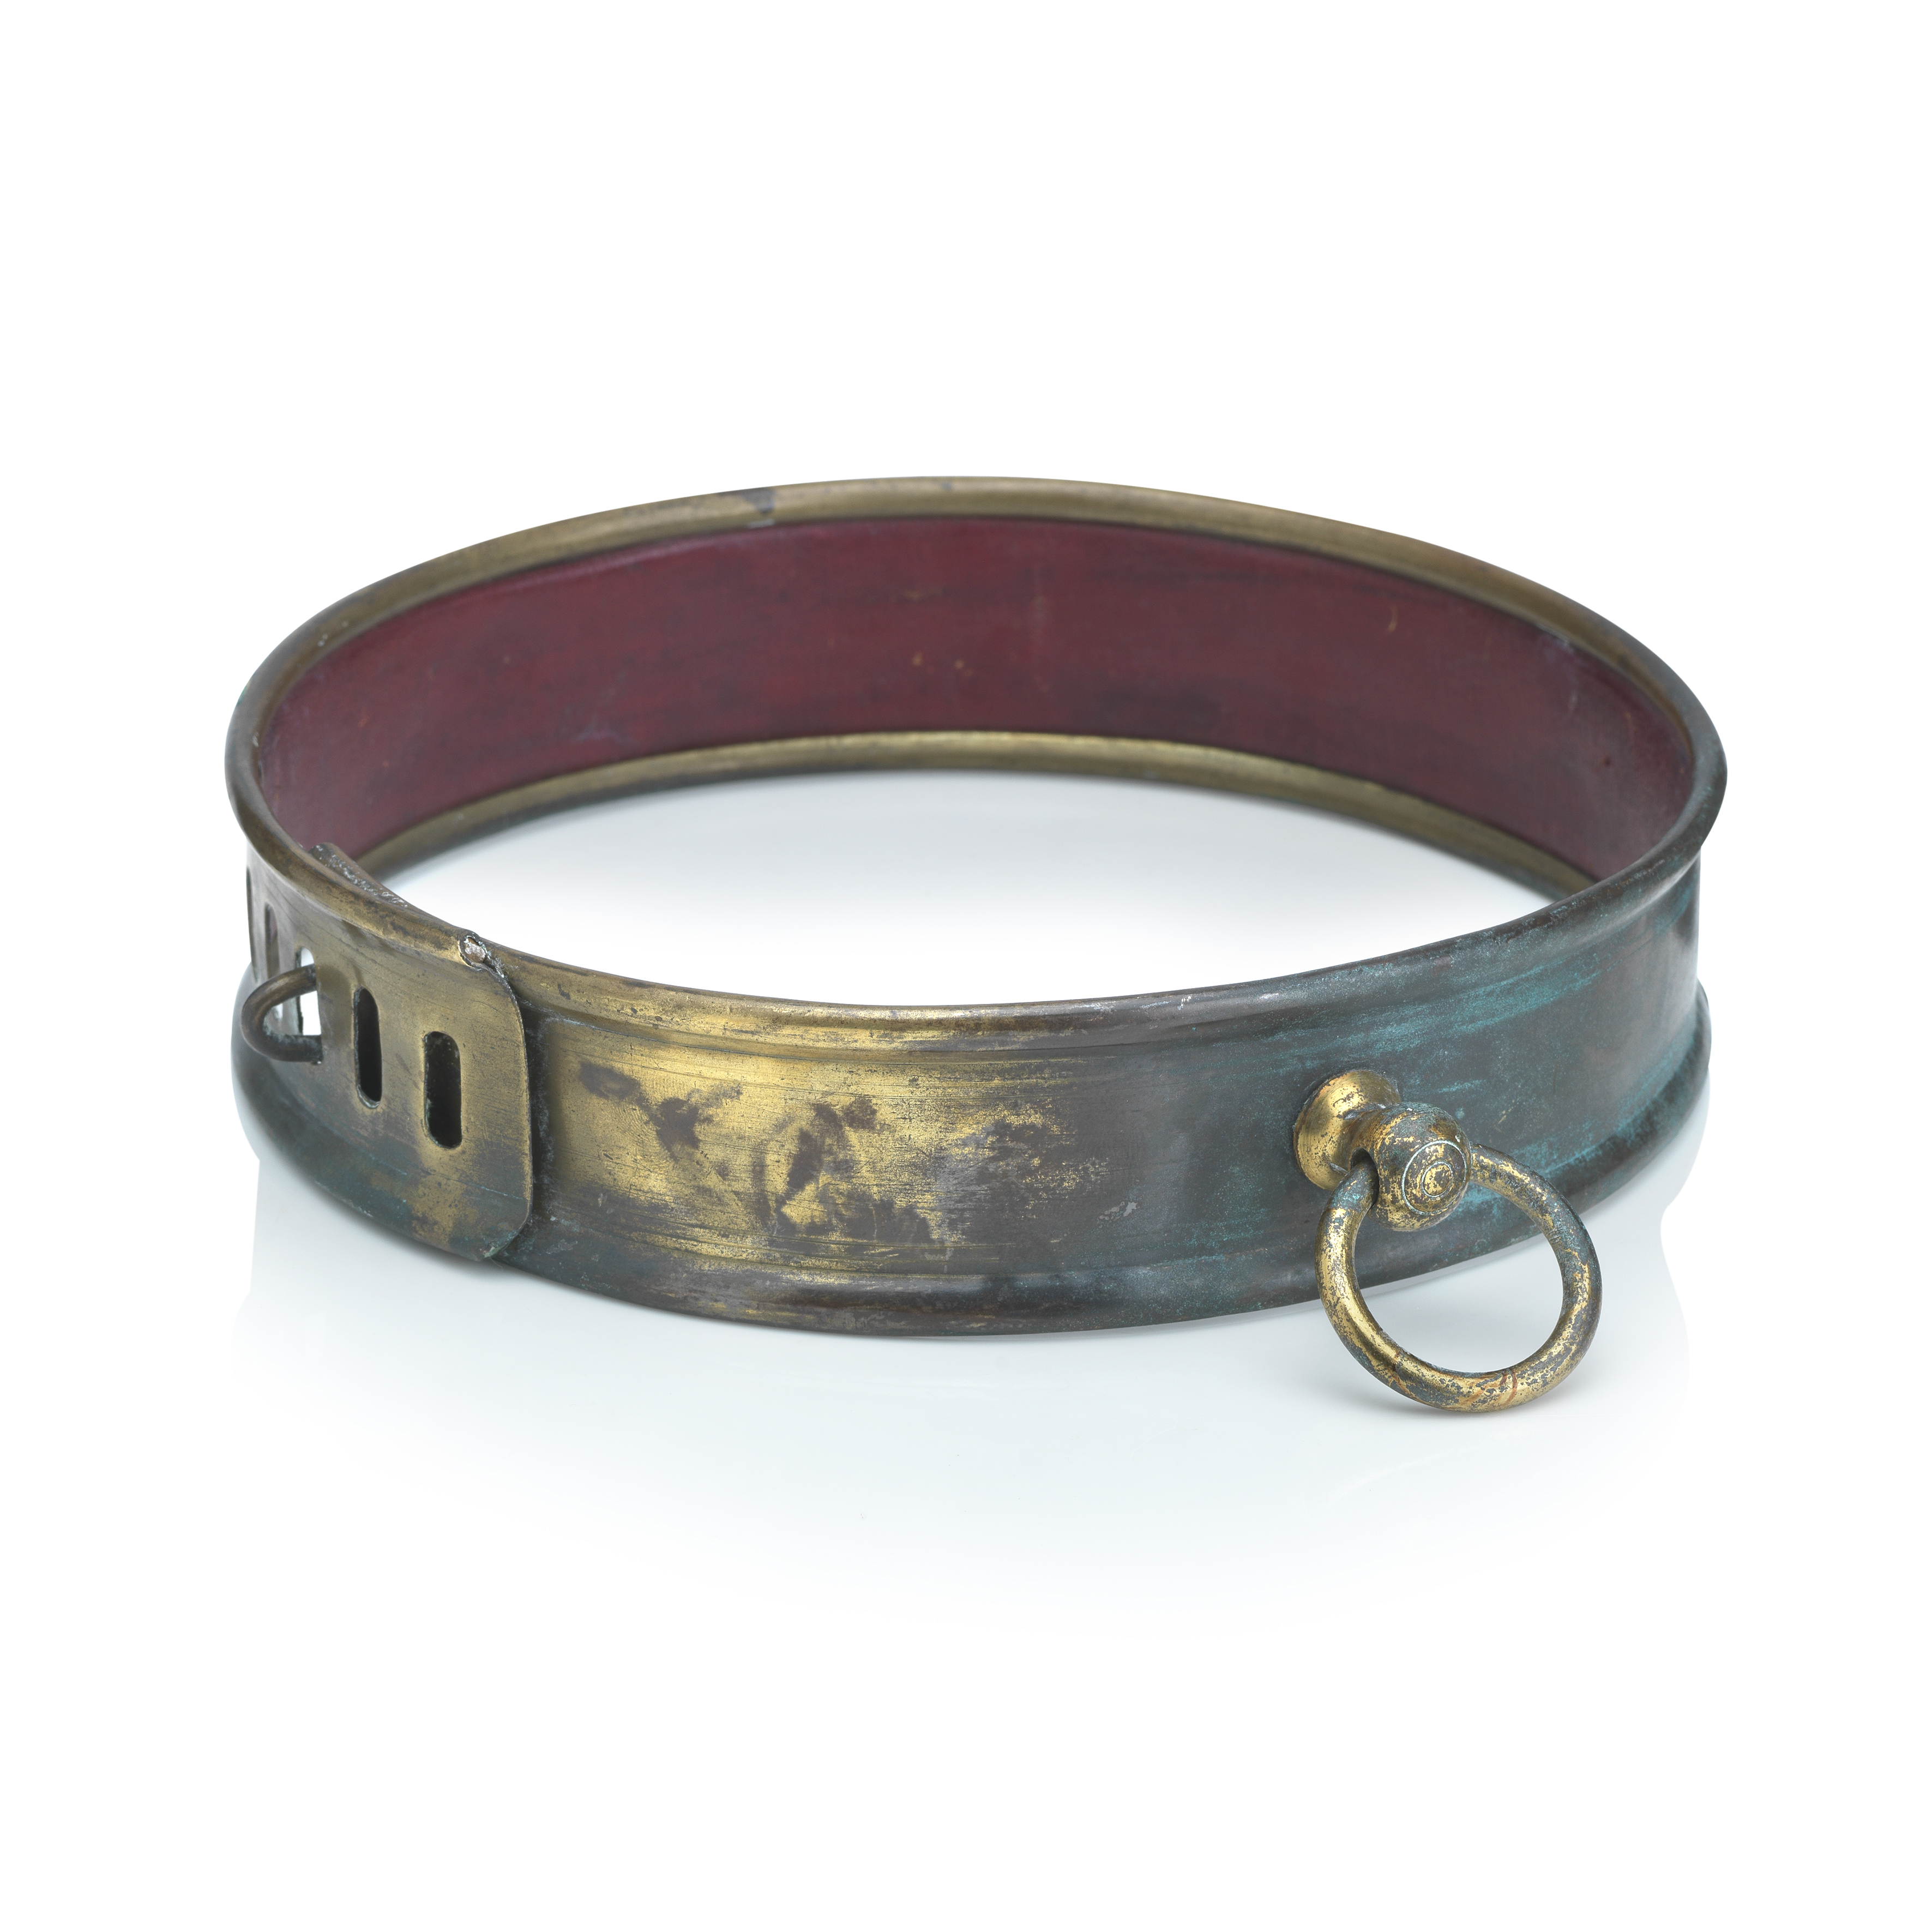 An early 19th century brass dog collar